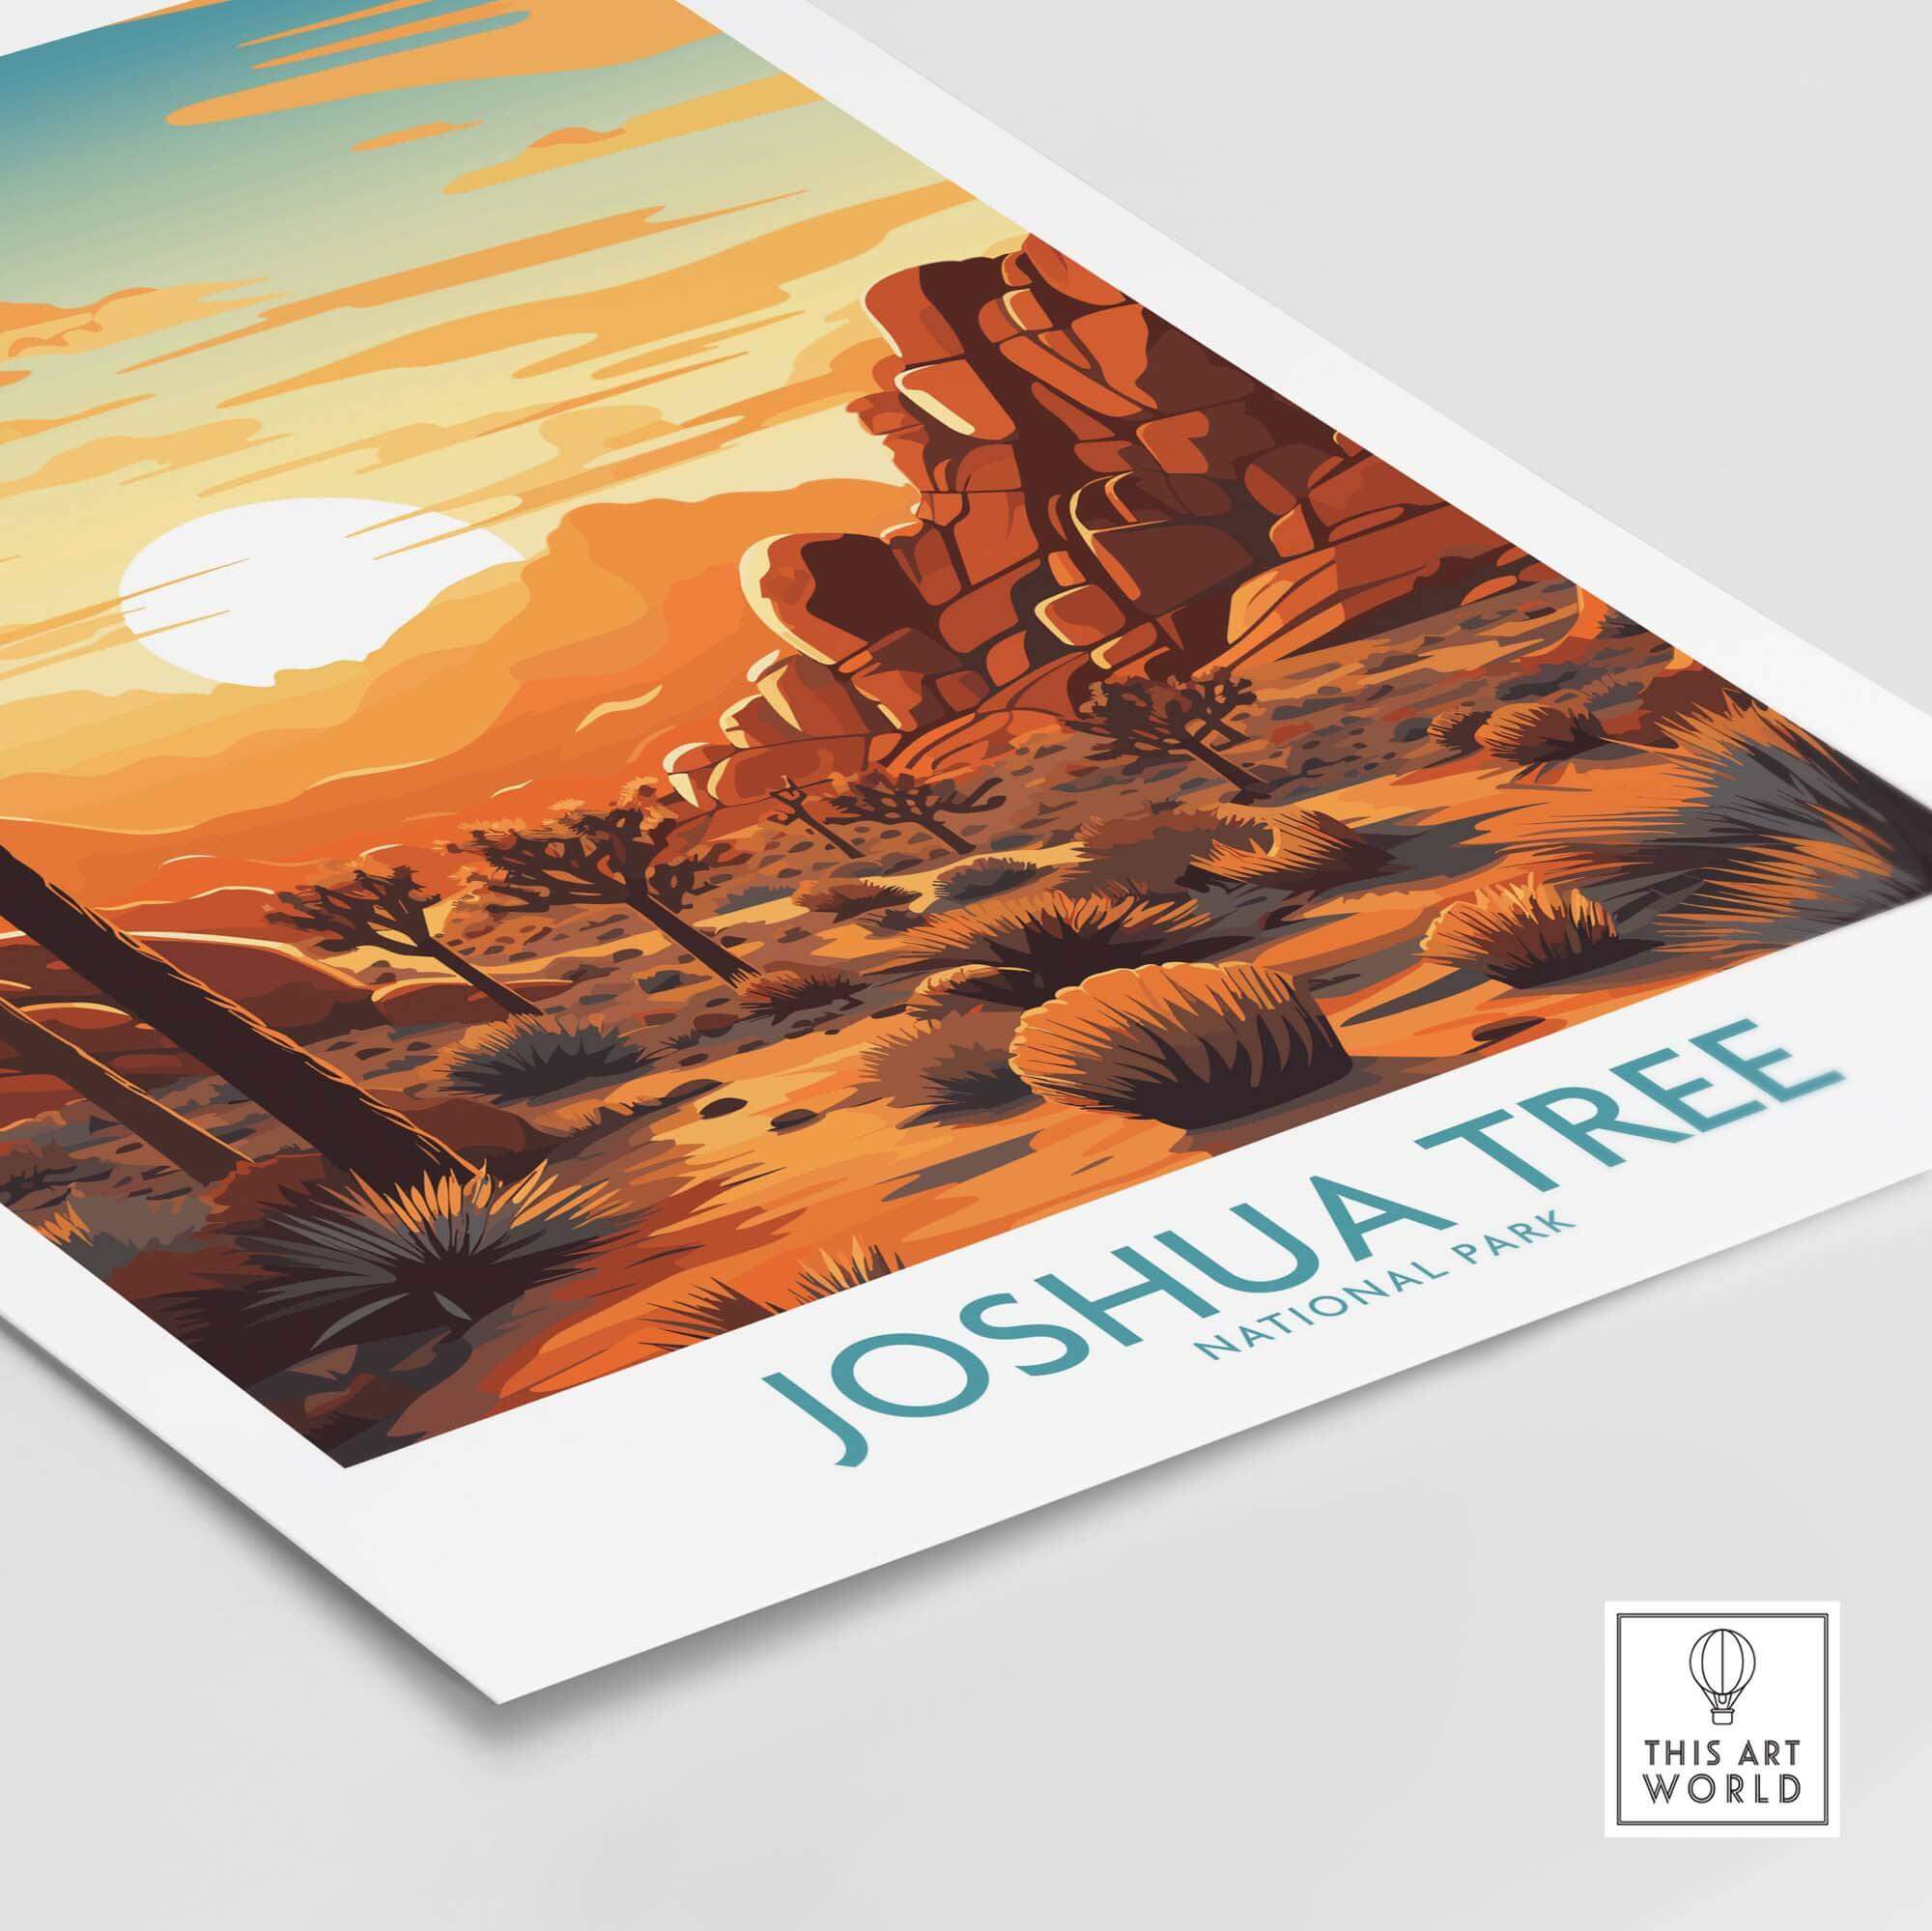 Joshua Tree Wall Art Poster